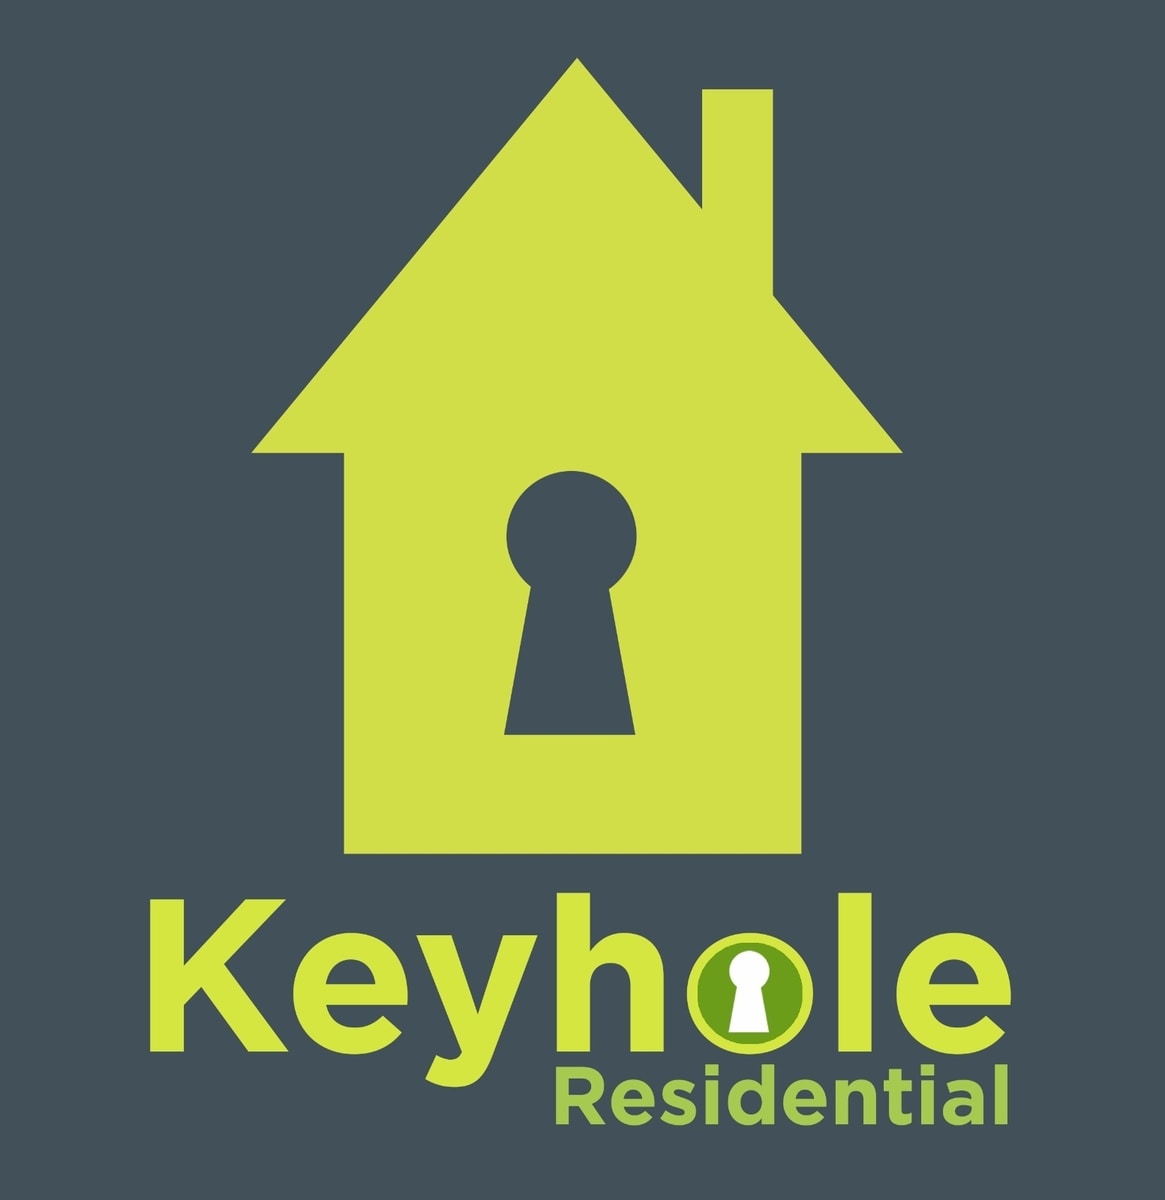 Keyhole Residential